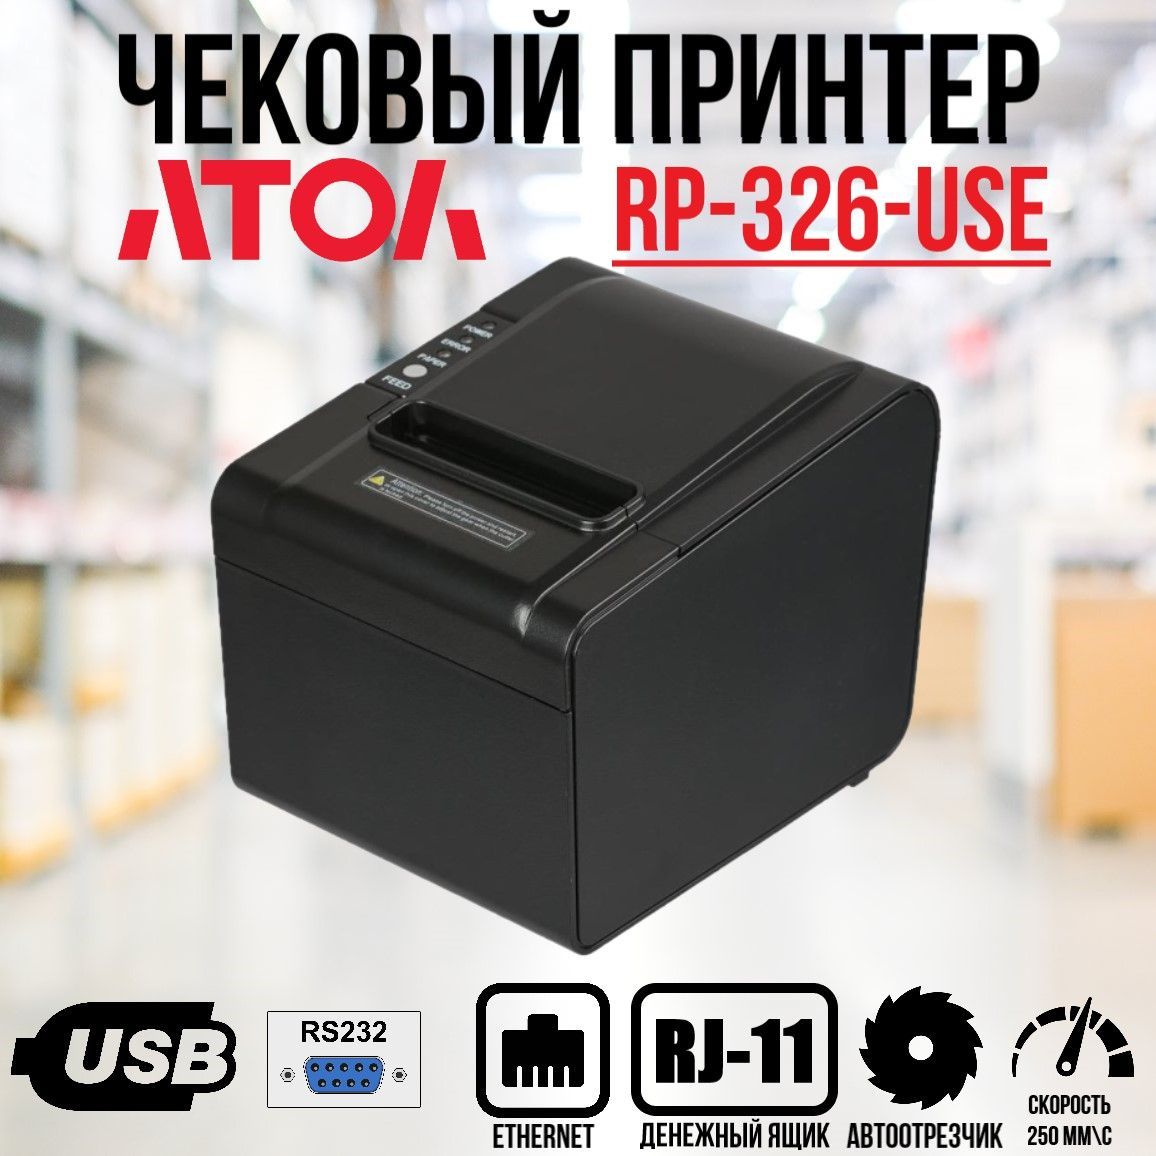 Принтер атол rp 326. Атол Rp-326-use. Чековый принтер Атол Rp-326-use, черный, БП.. Атол Rp 326 use USB шнур купить.